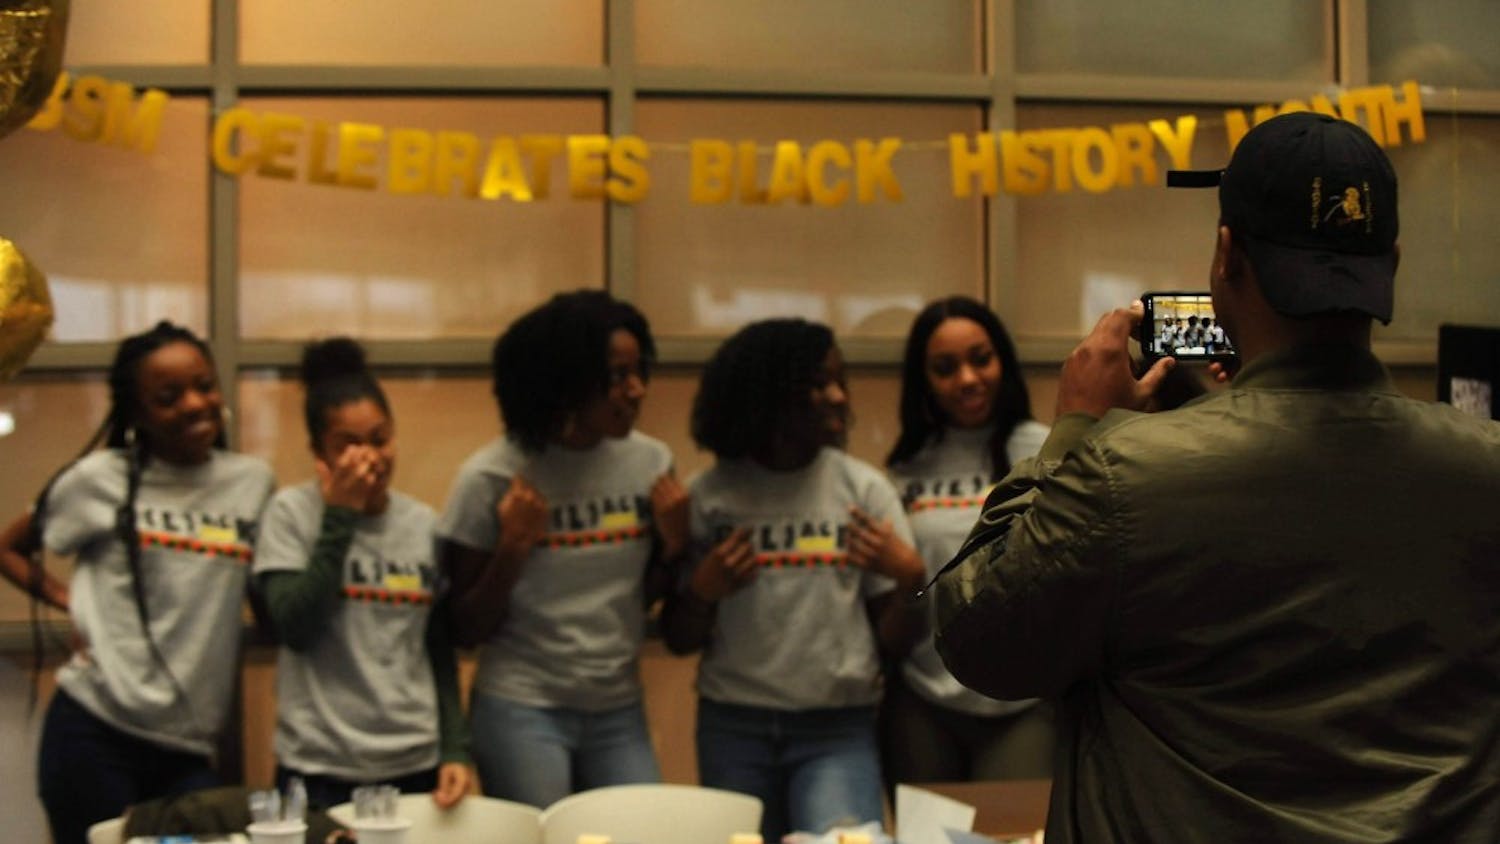 BSM Black History Month